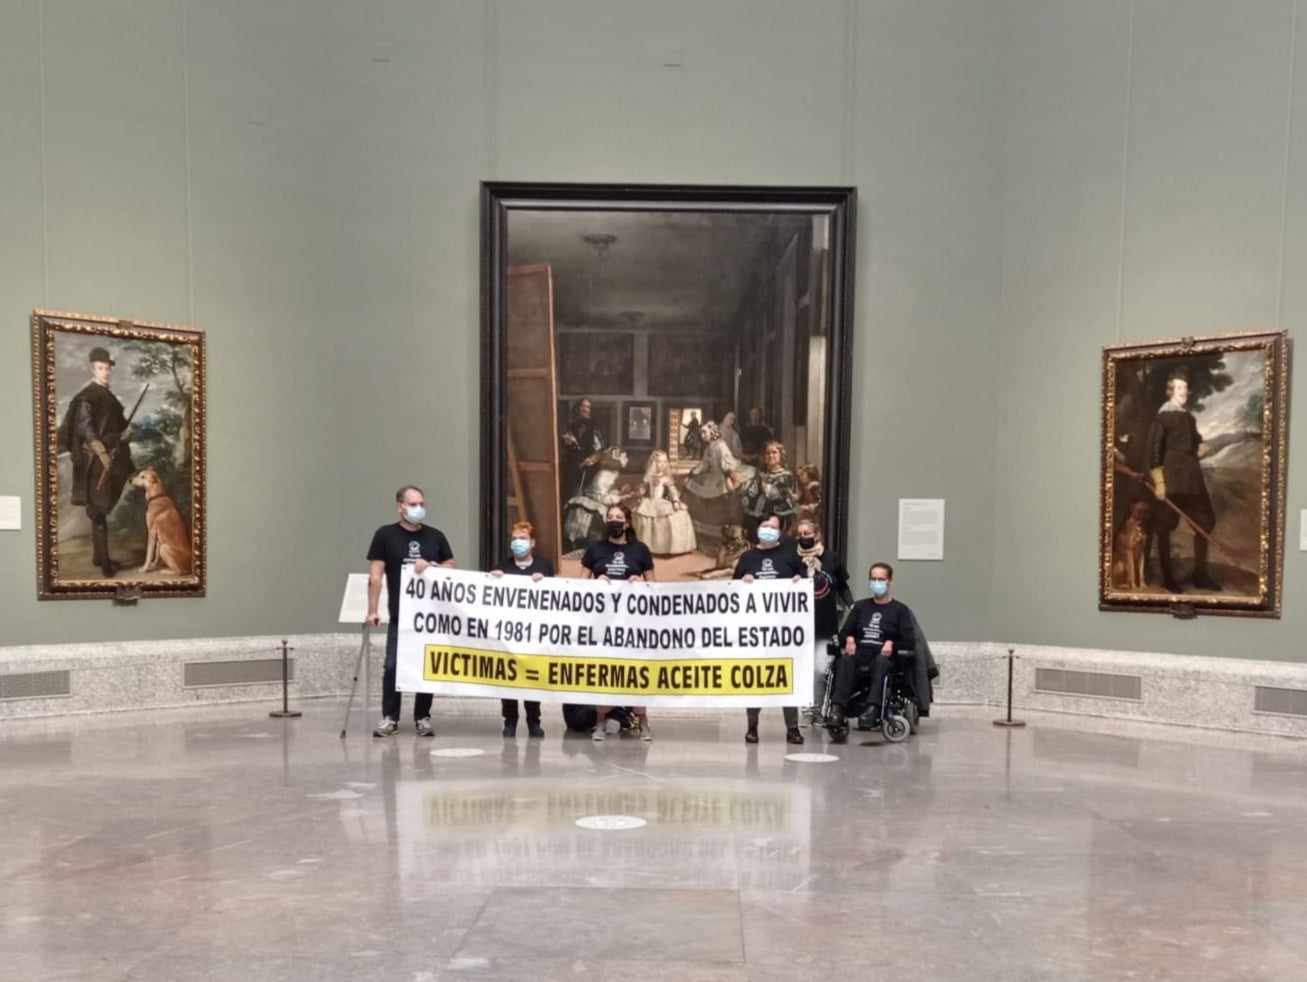 Protestors arrived at the El Prado Museum in Madrid, Spain from 10am.